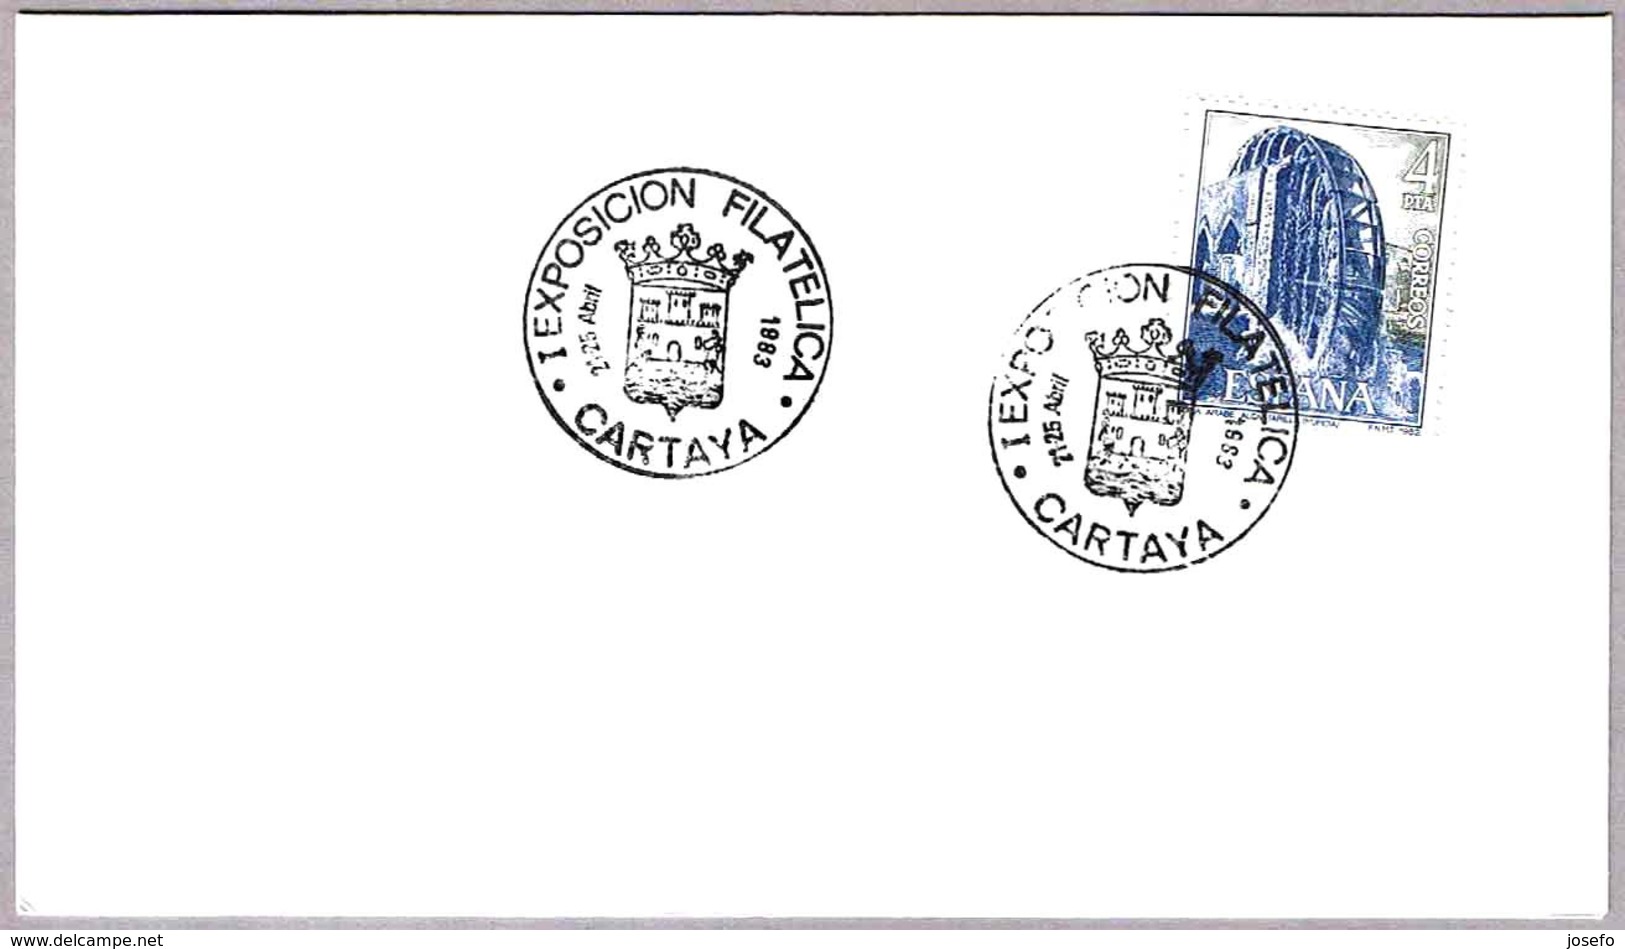 Matasellos I EXP. FILATELICA - CARTAYA, Huelva, Andalucia, 1983 - Covers